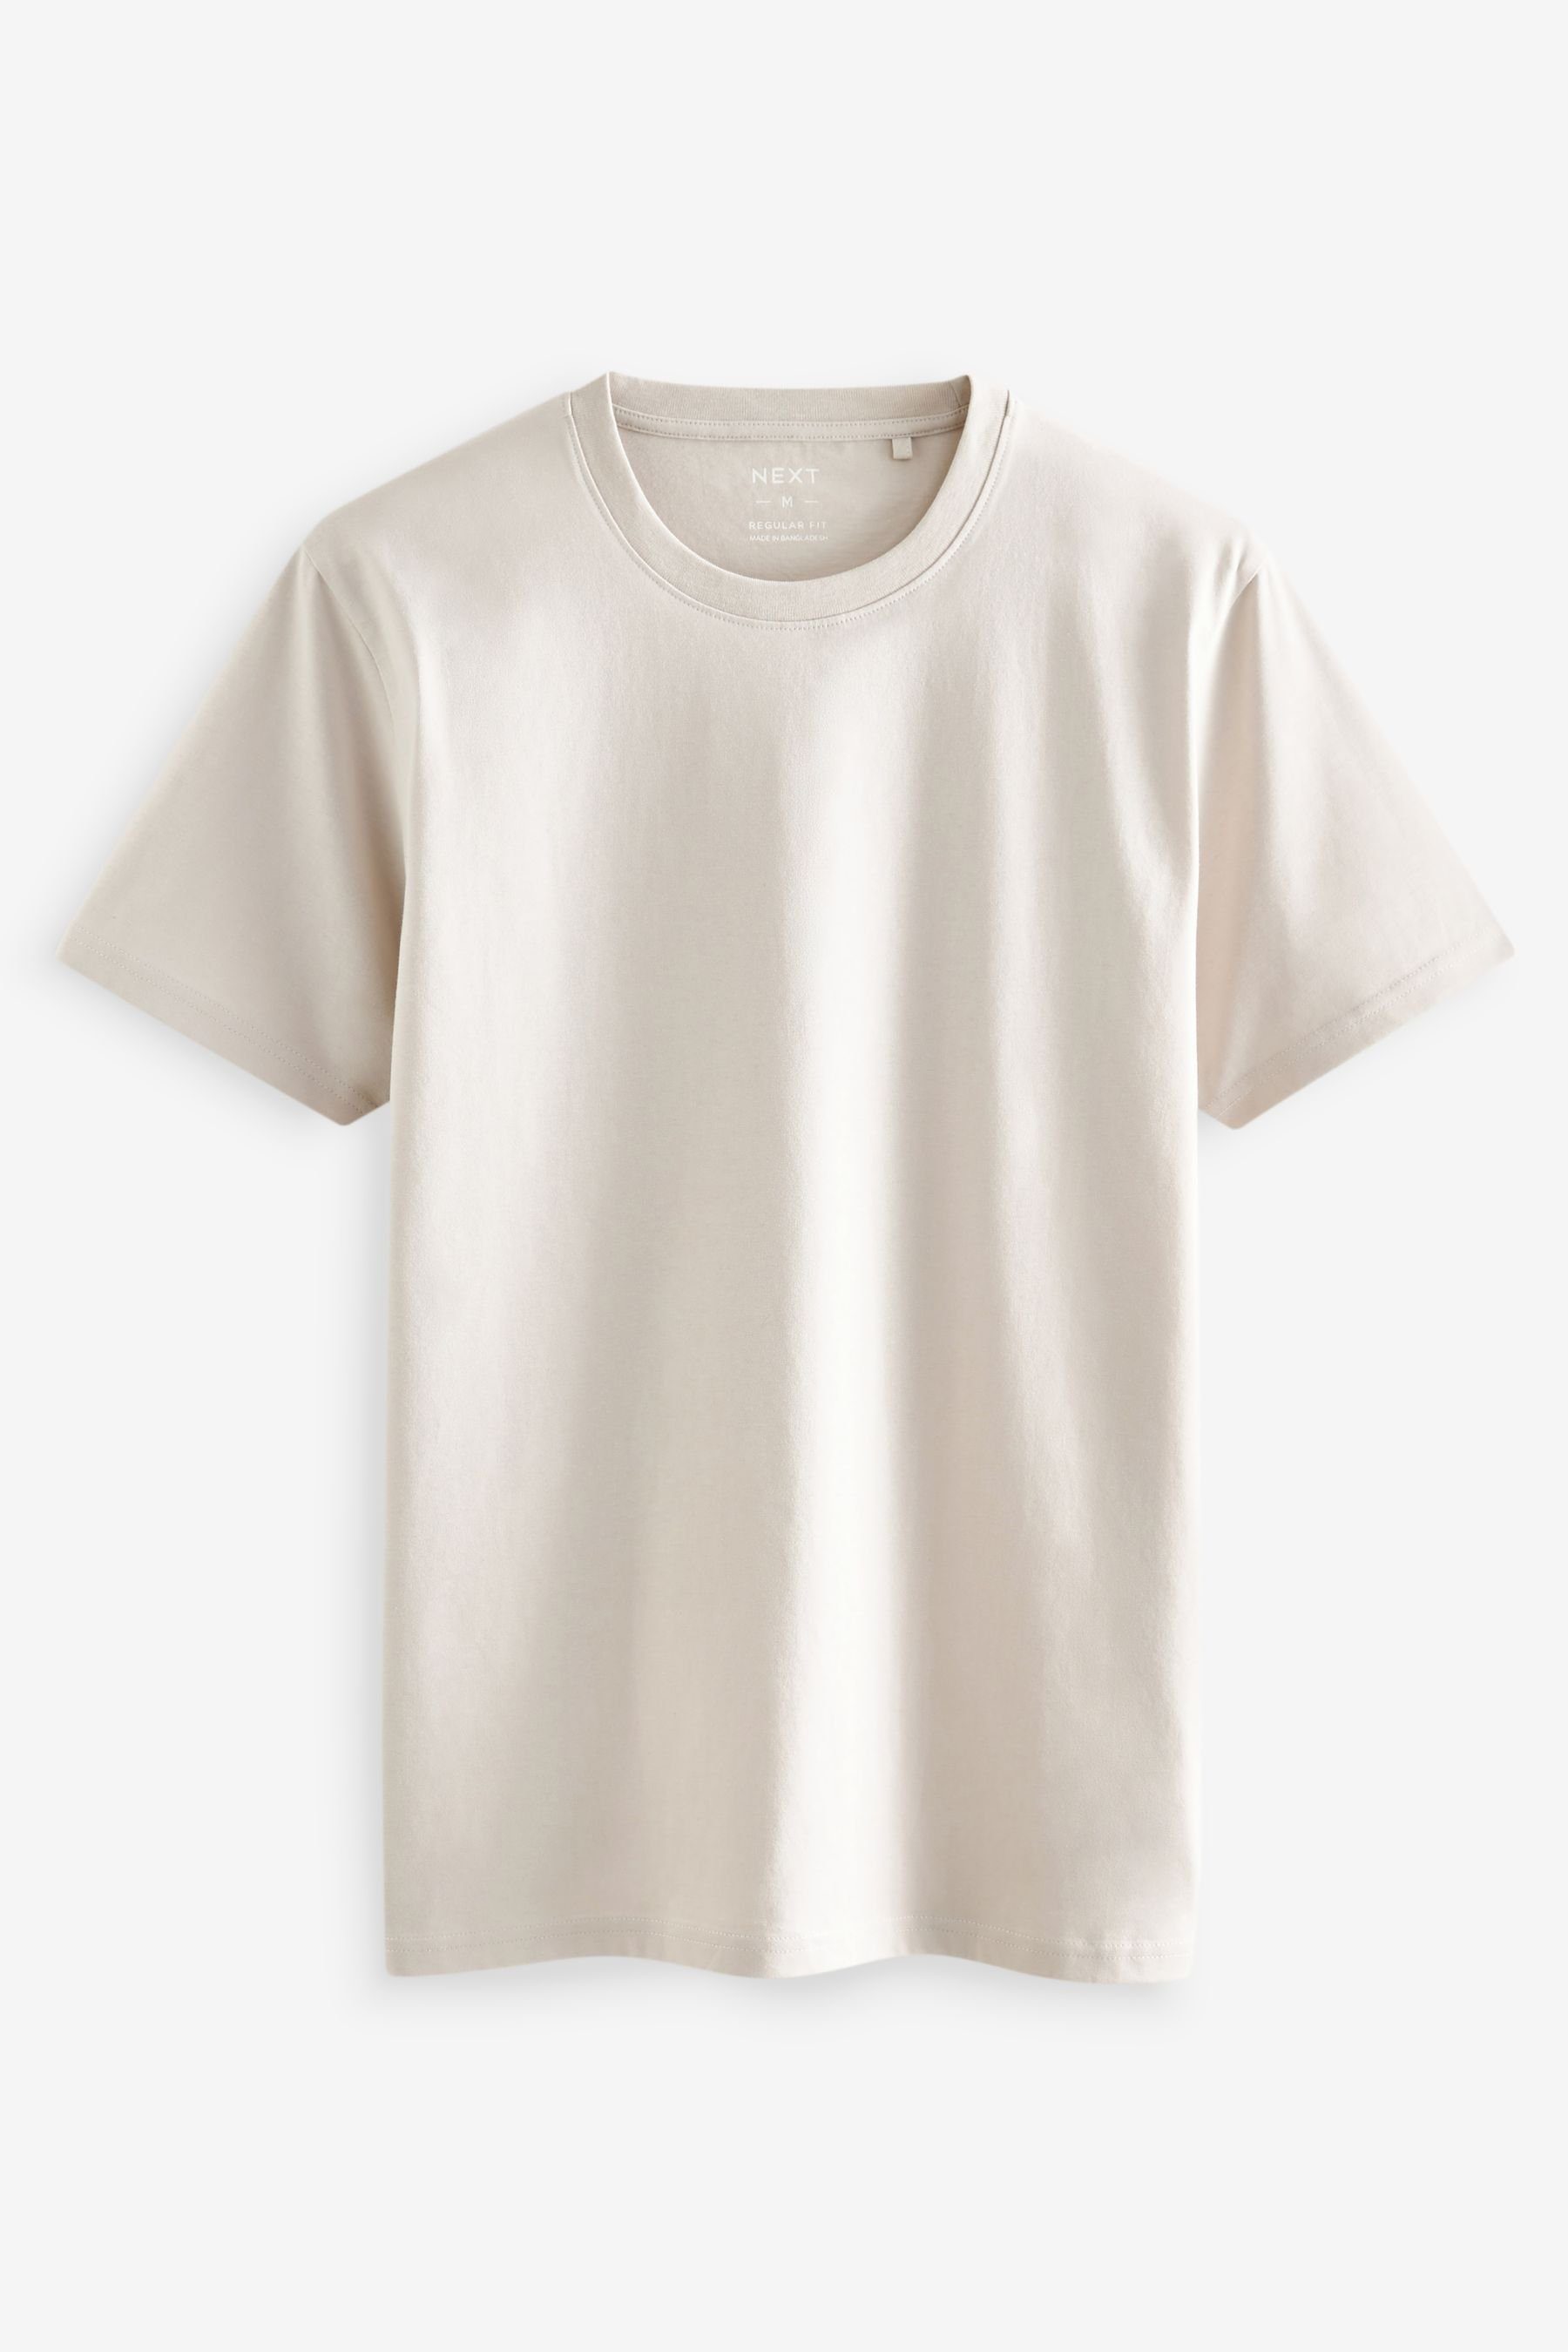 (6-tlg) T-Shirts Grey/Black/Blue/Light Blue/White/Pink Next T-Shirt 6er-Pack